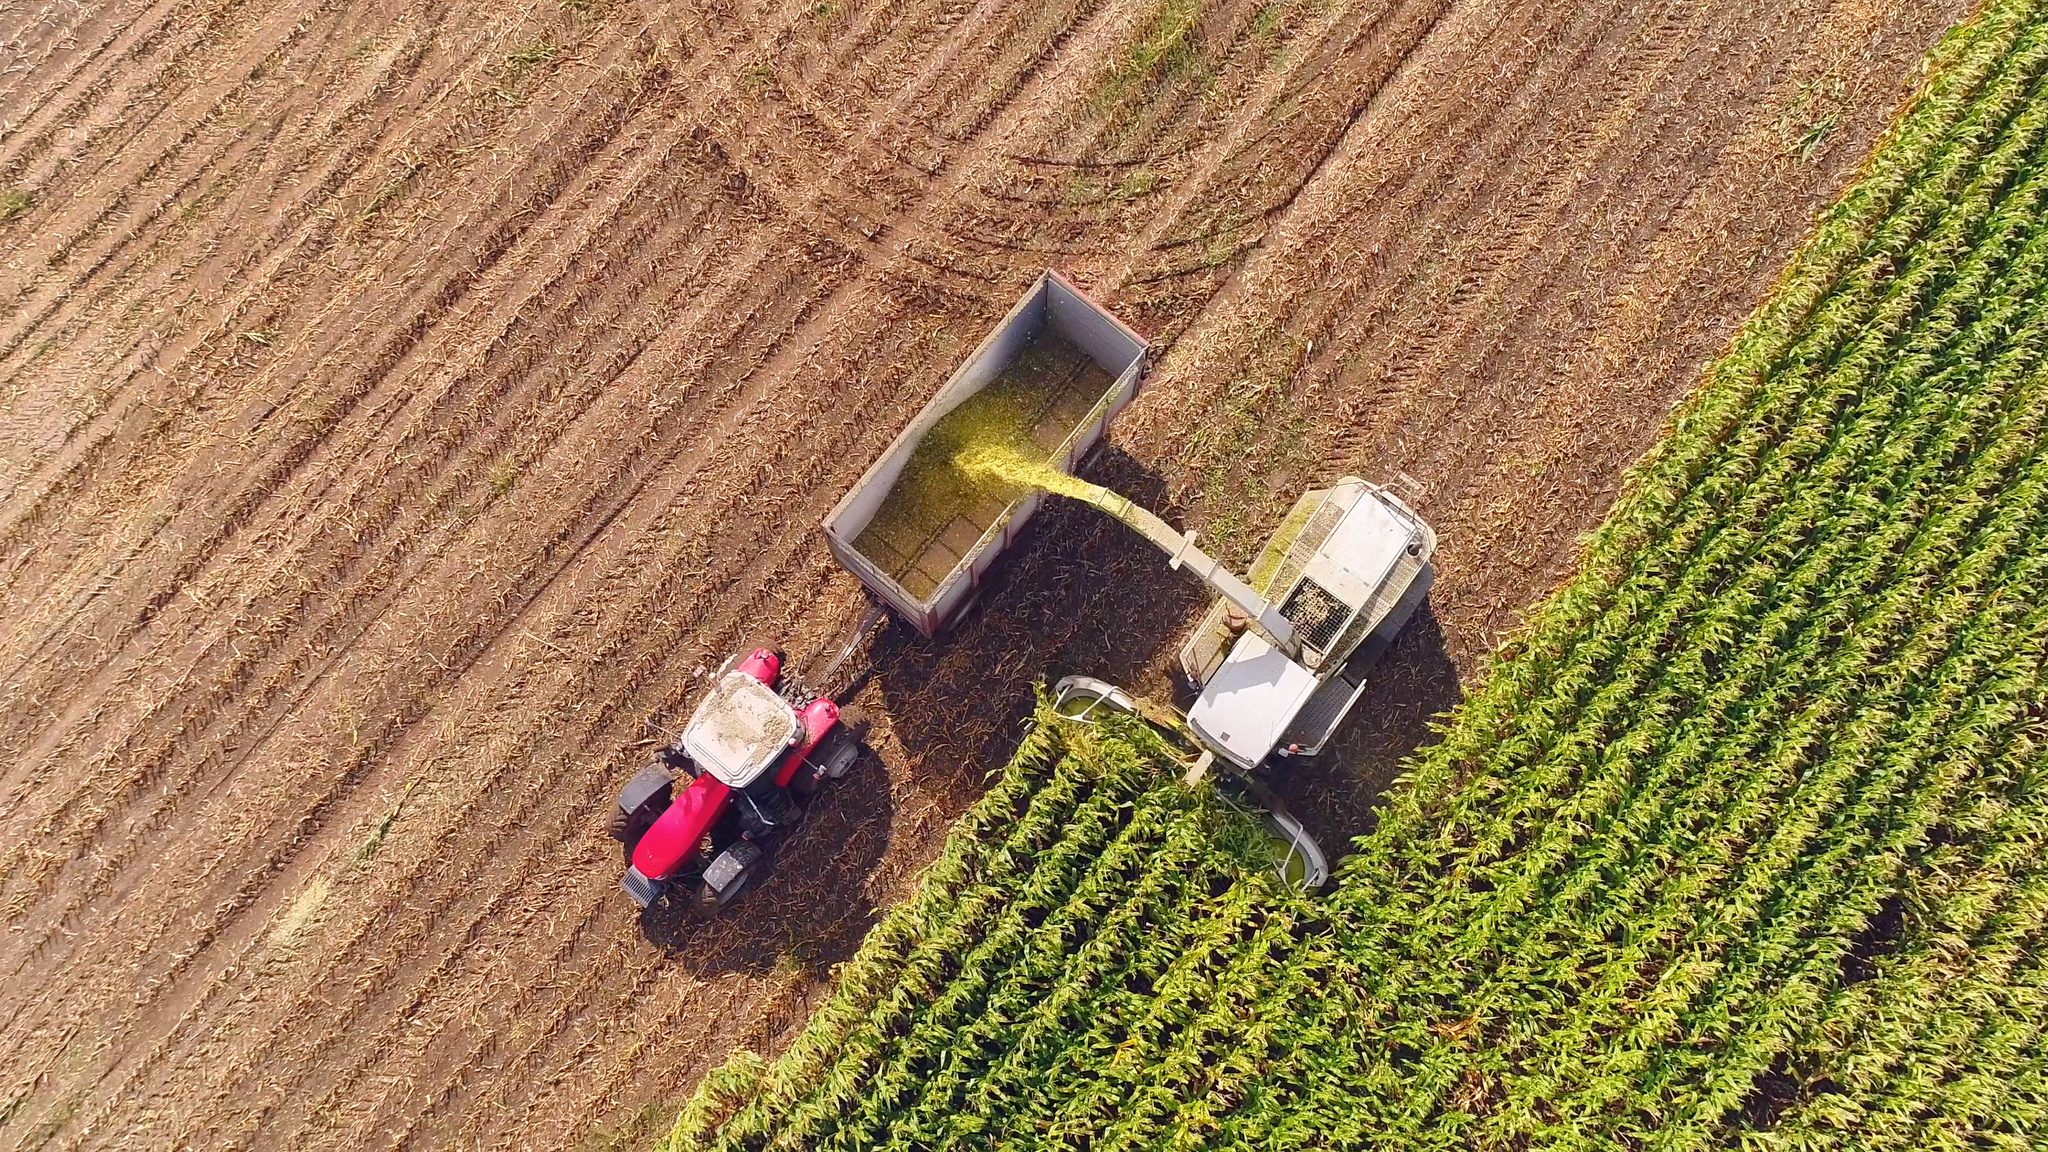 Farm machines harvesting corn in Autumn, aerial view